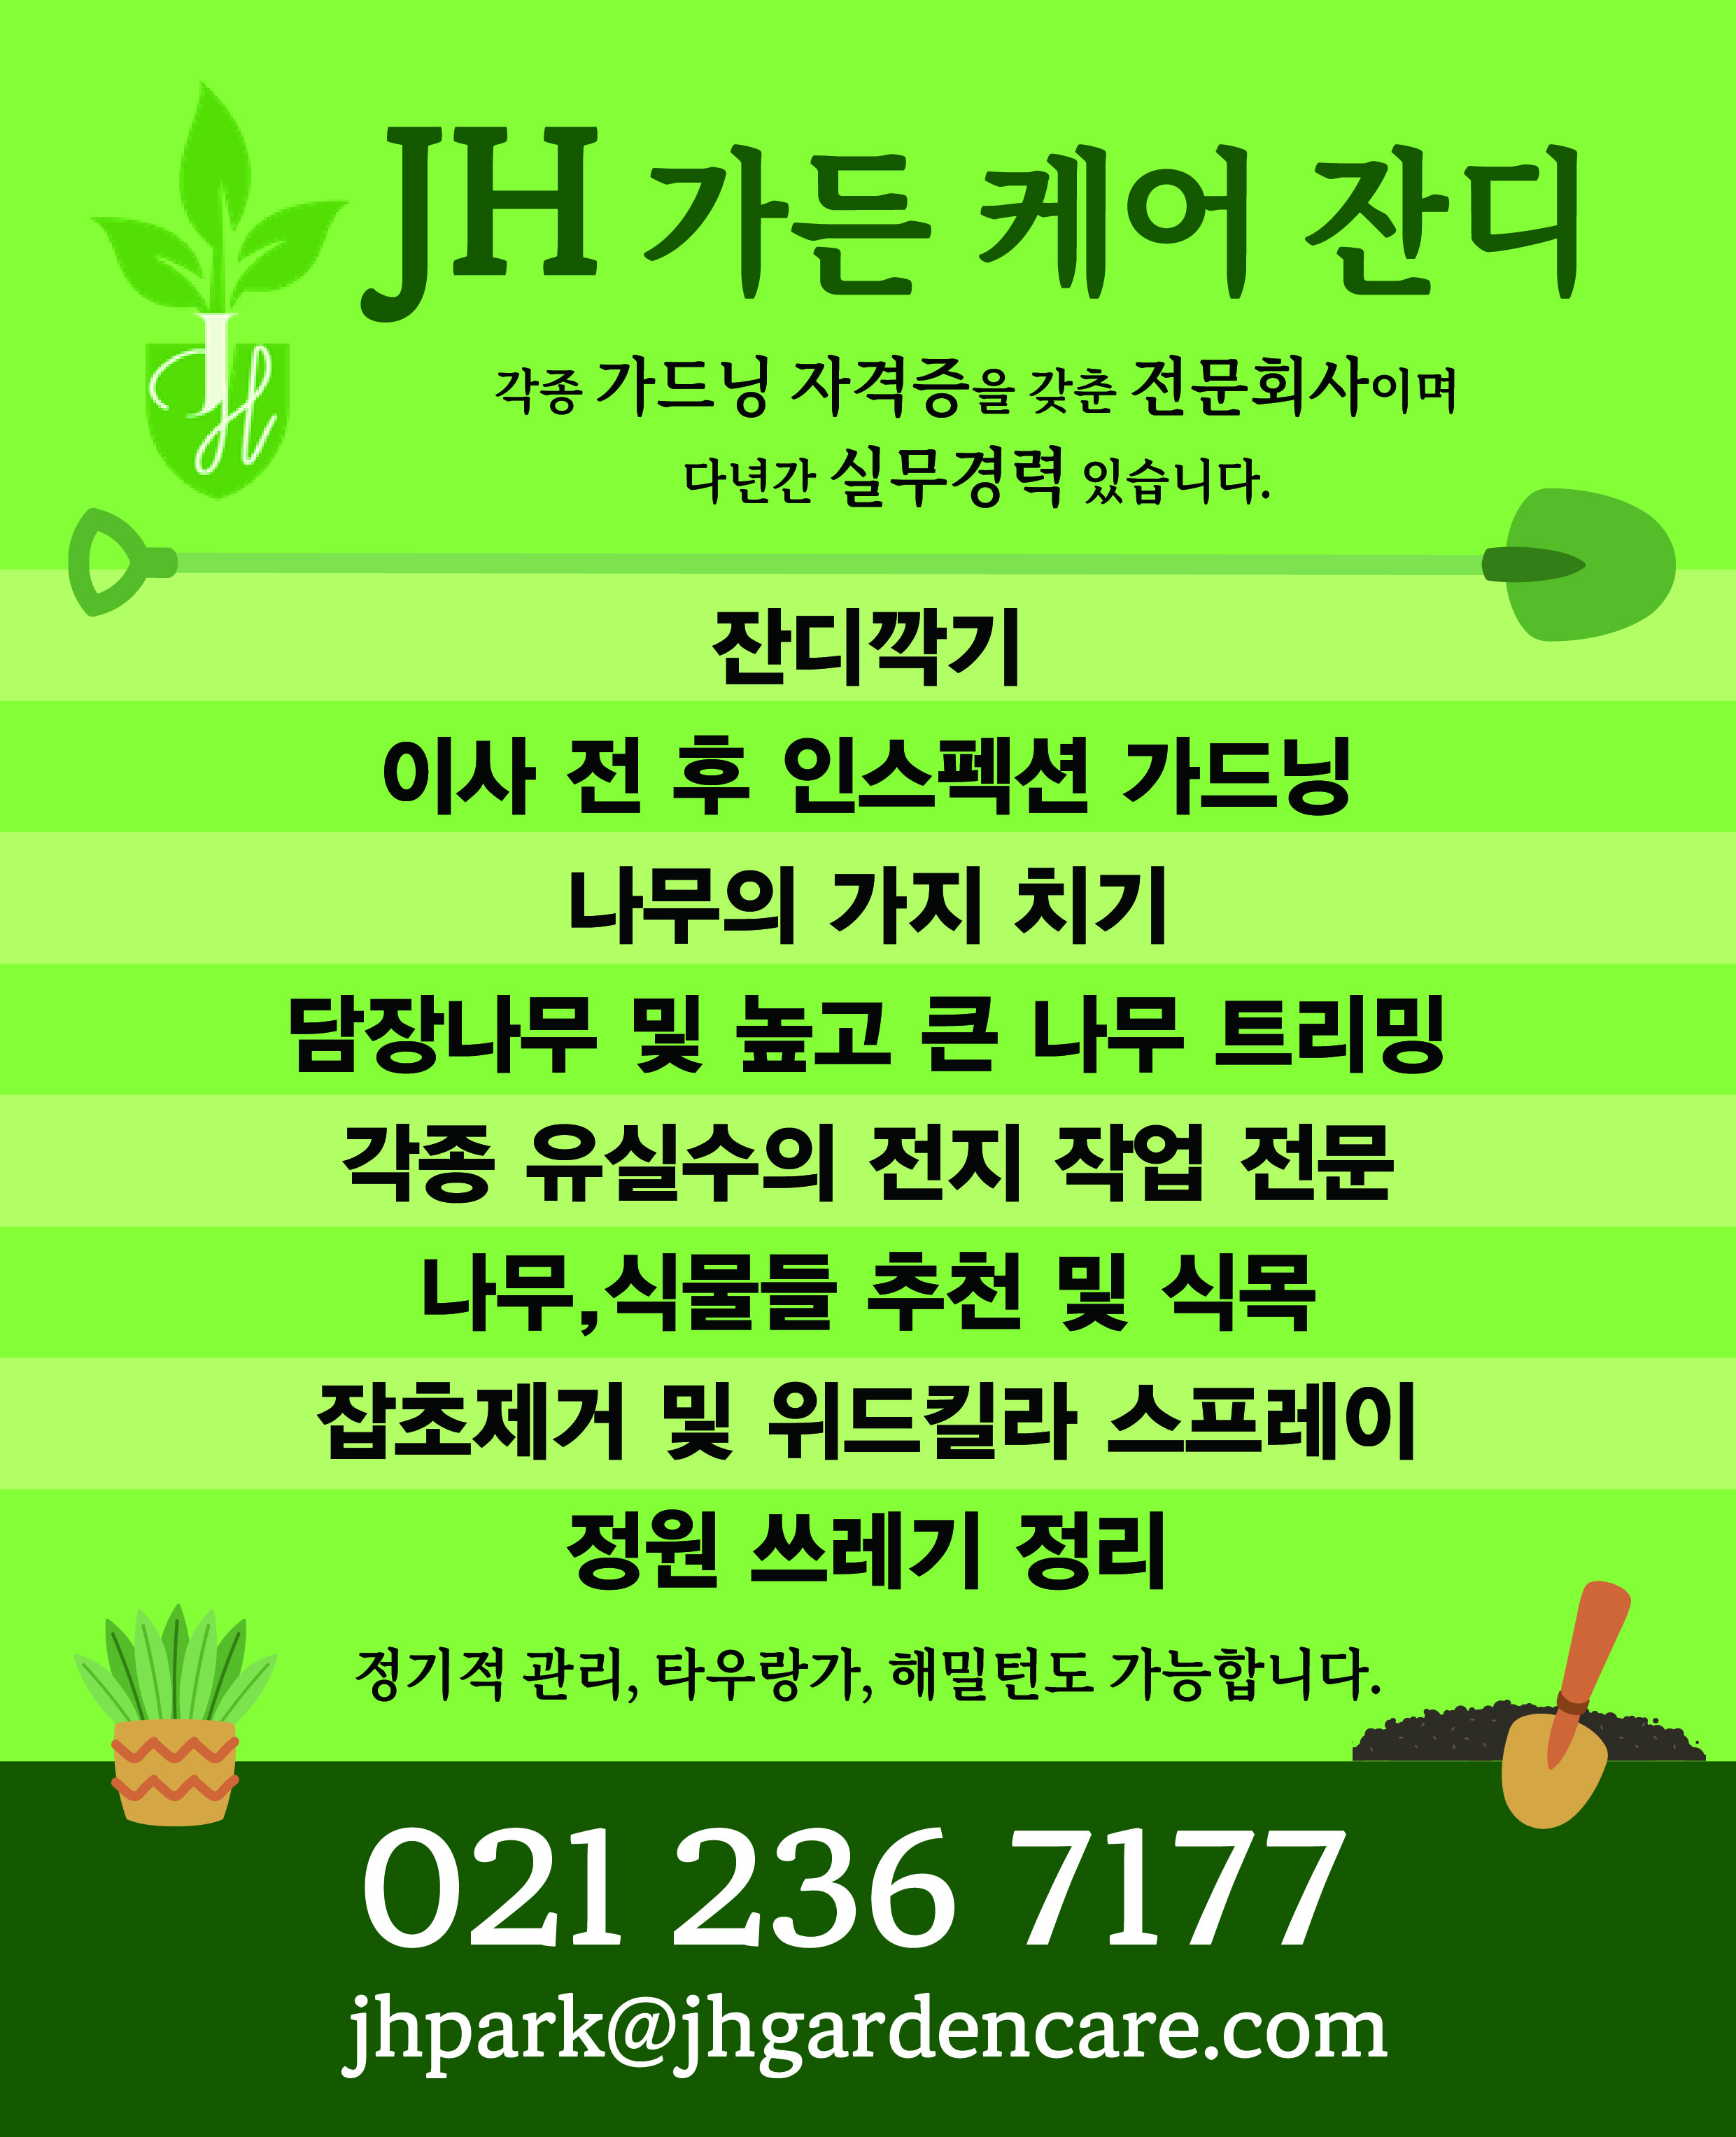 JH Garden Care_책자_대지 1 (1).jpg